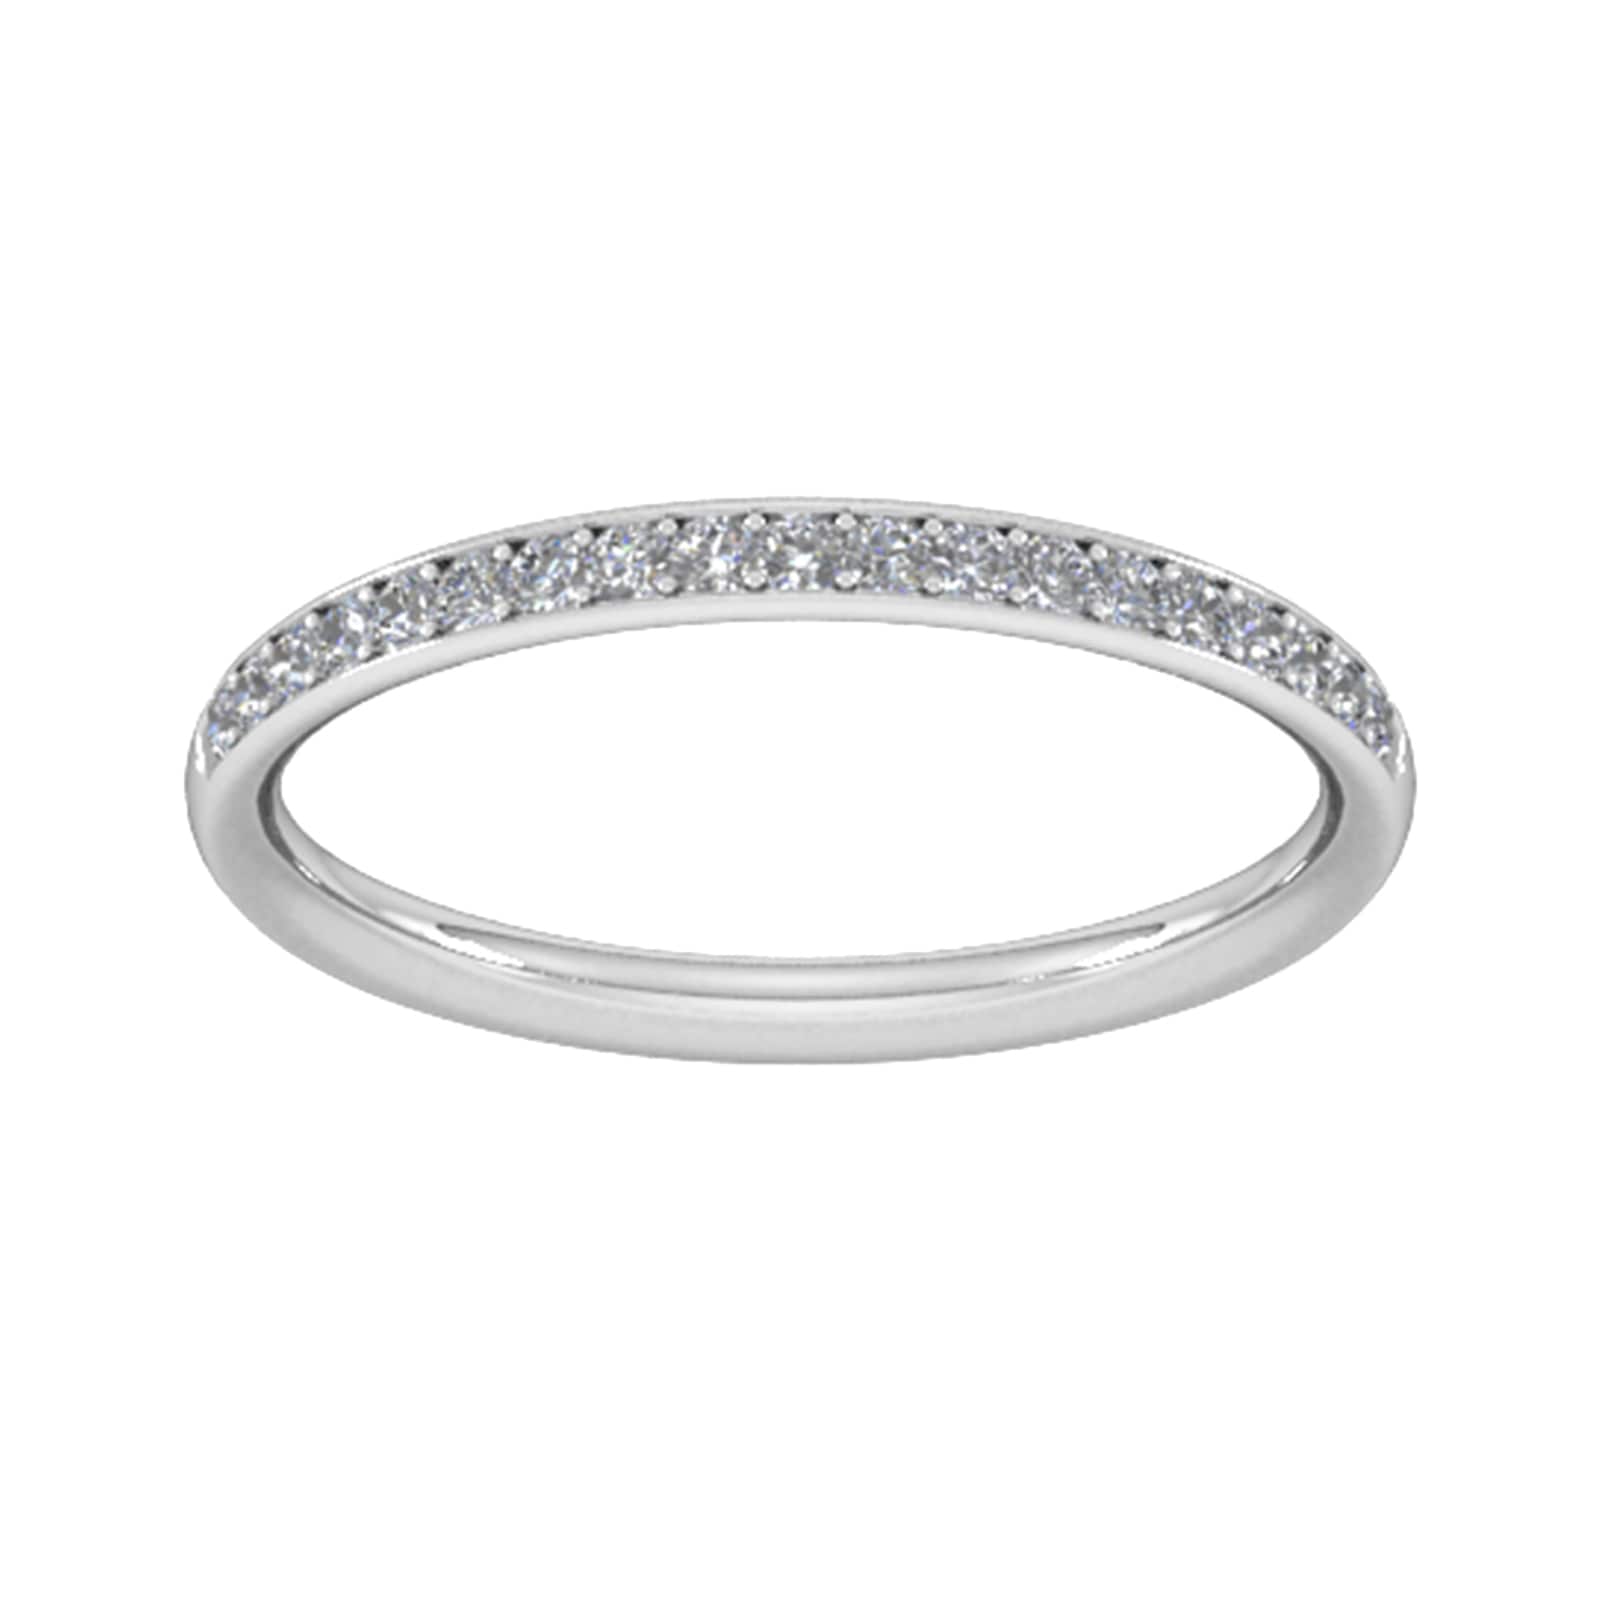 0.18 Carat Total Weight Brilliant Cut Grain Set Diamond Wedding Ring In Platinum - Ring Size Q